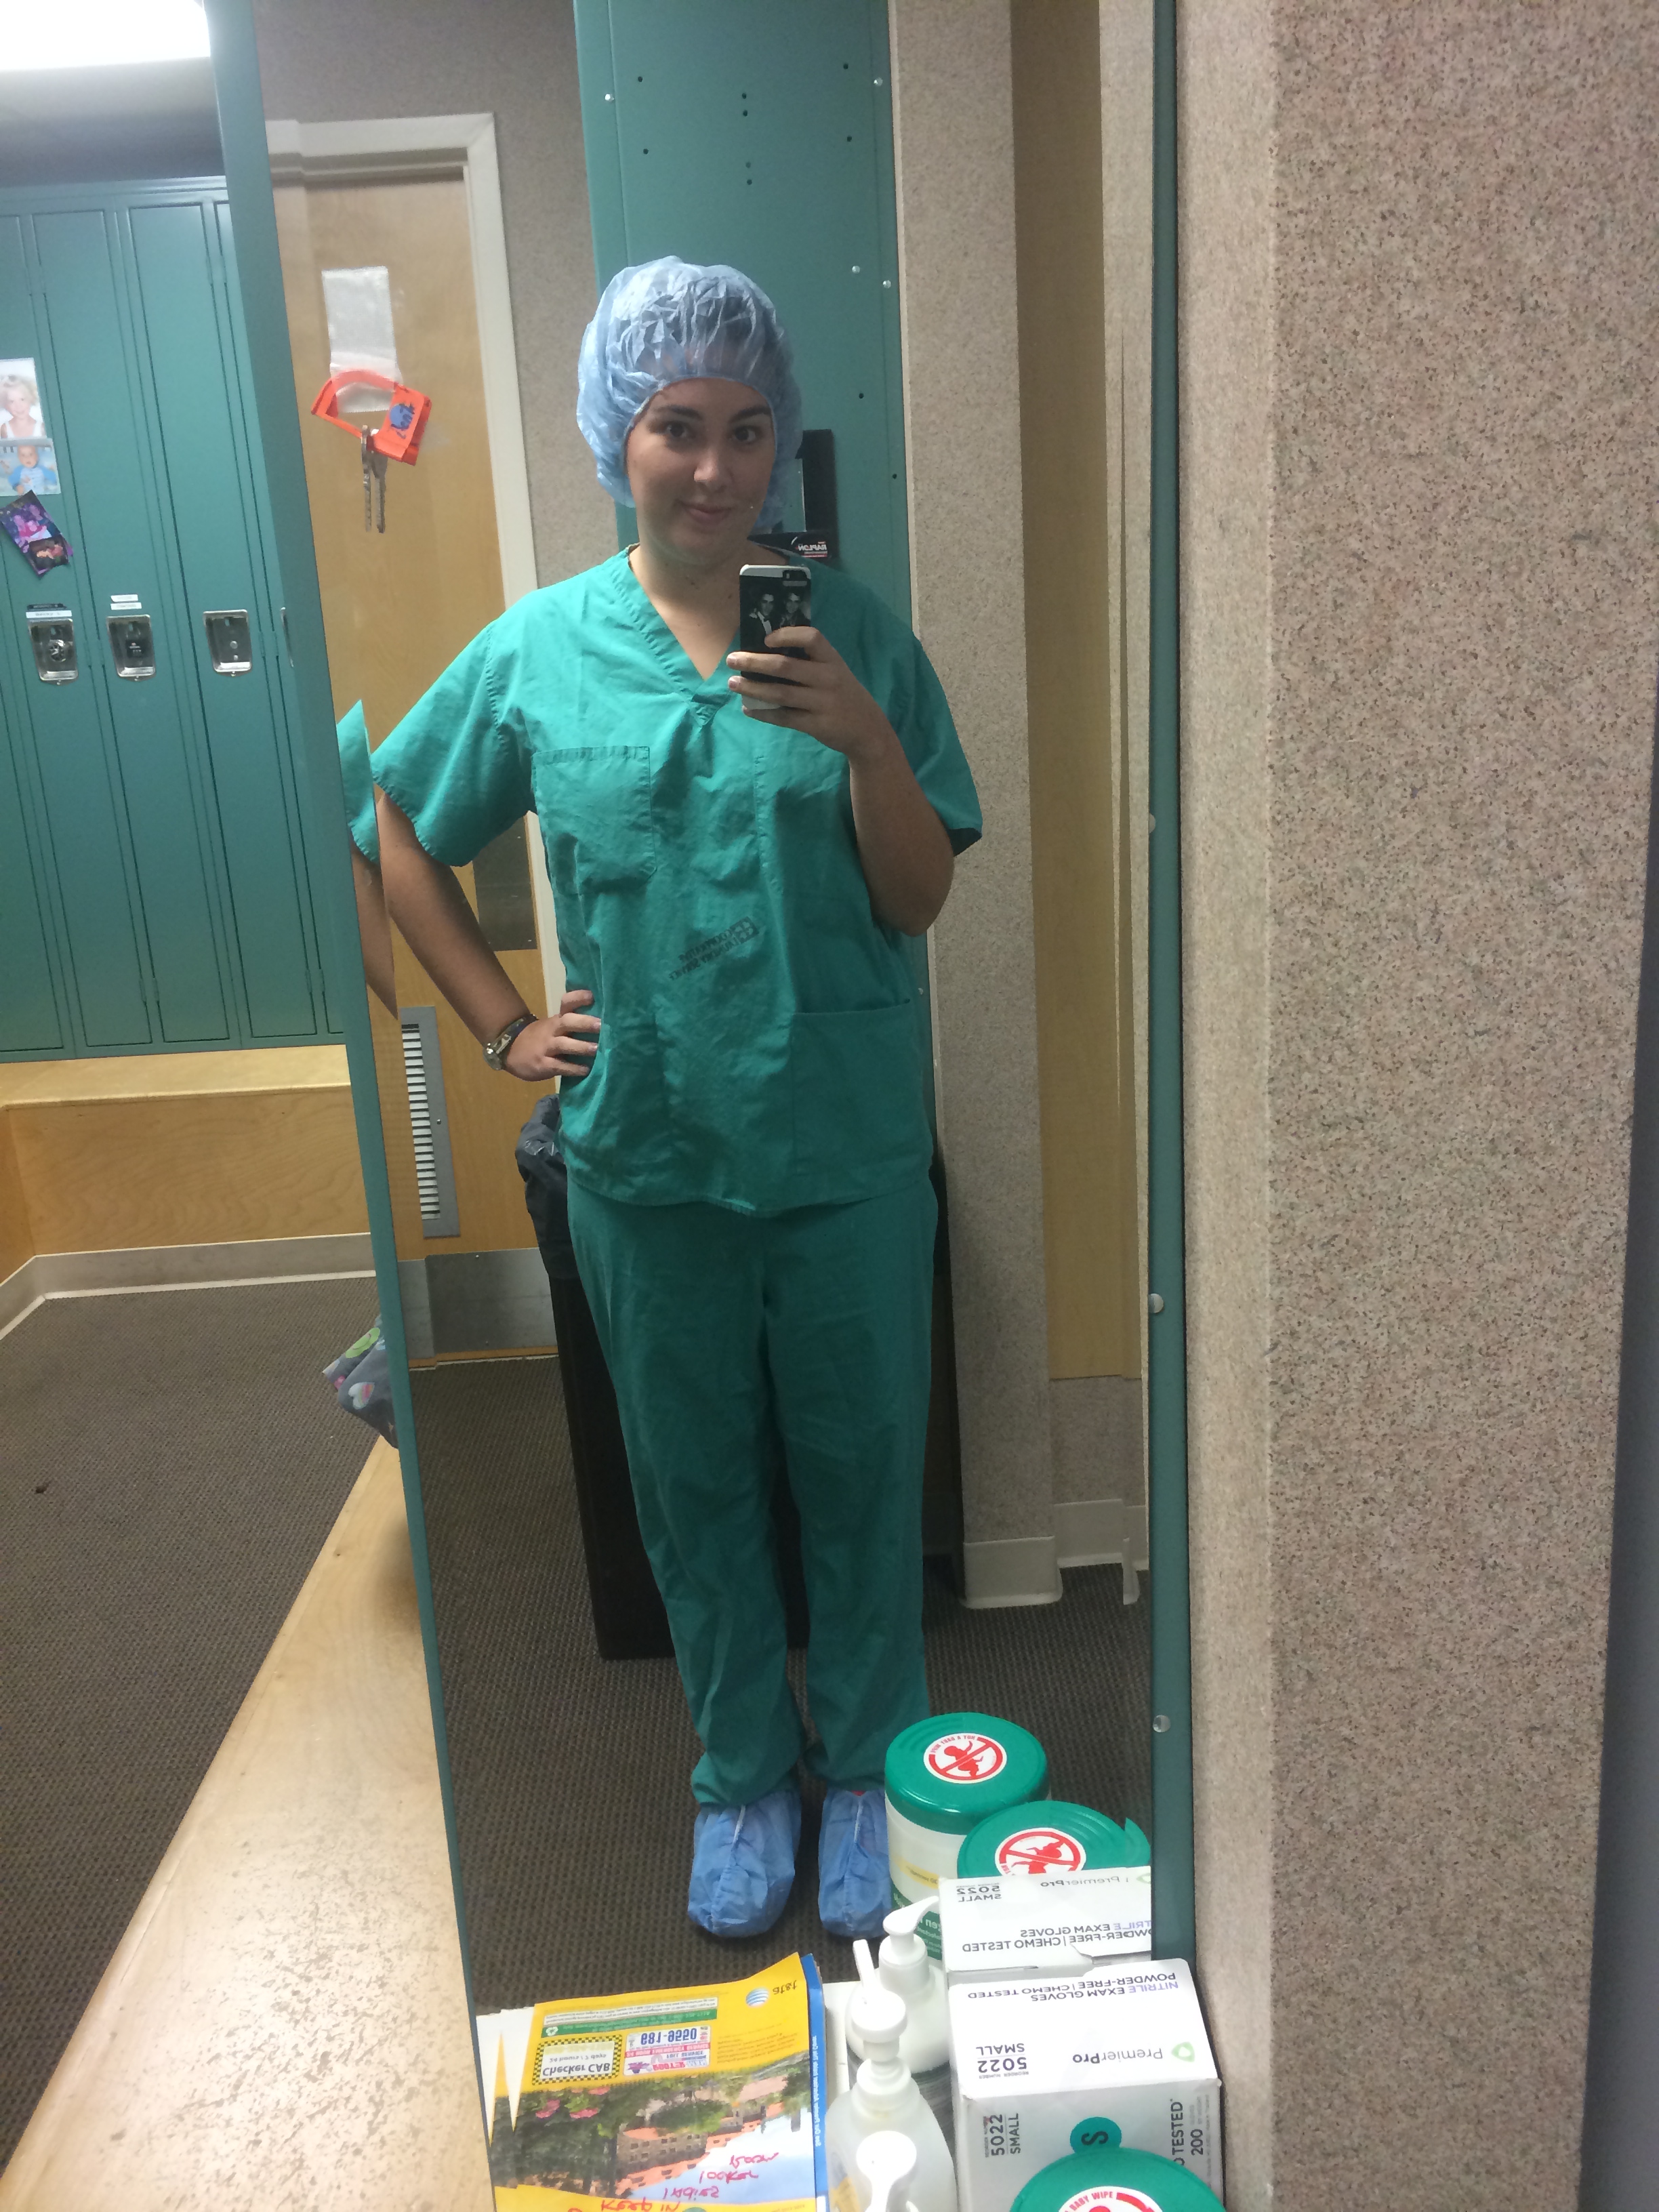 Sexy Nurse In Scrubs Selfie.